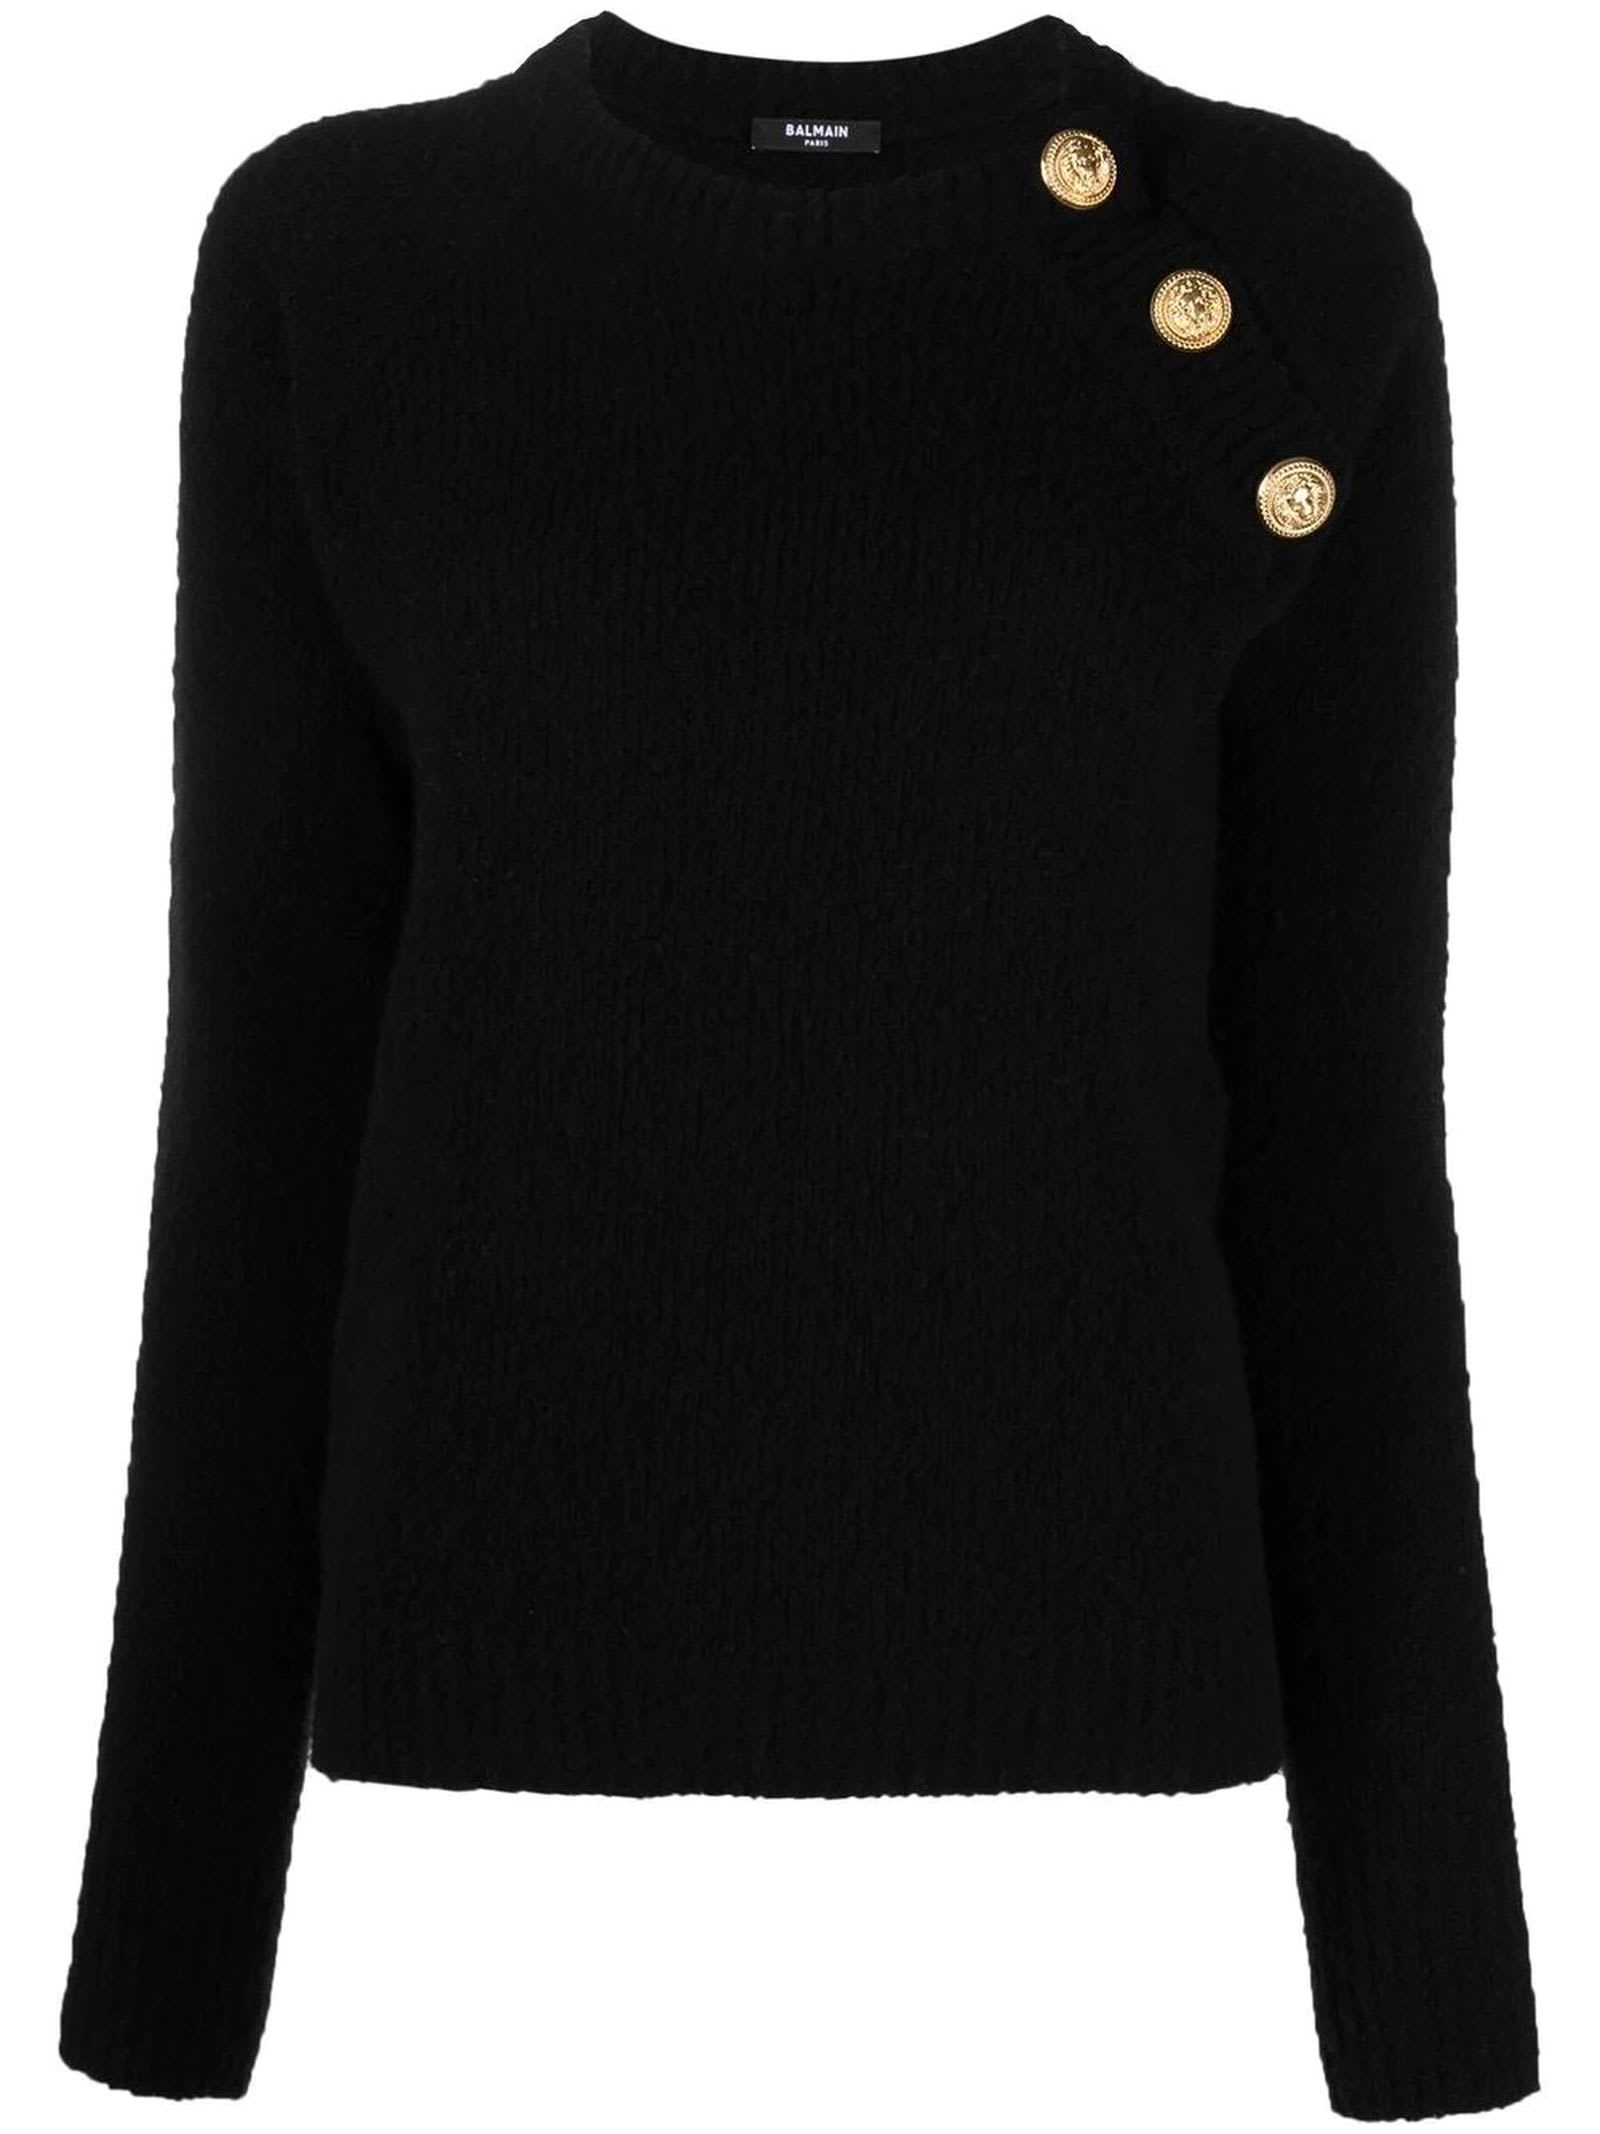 Balmain Black Wool And Cashmere Sweater